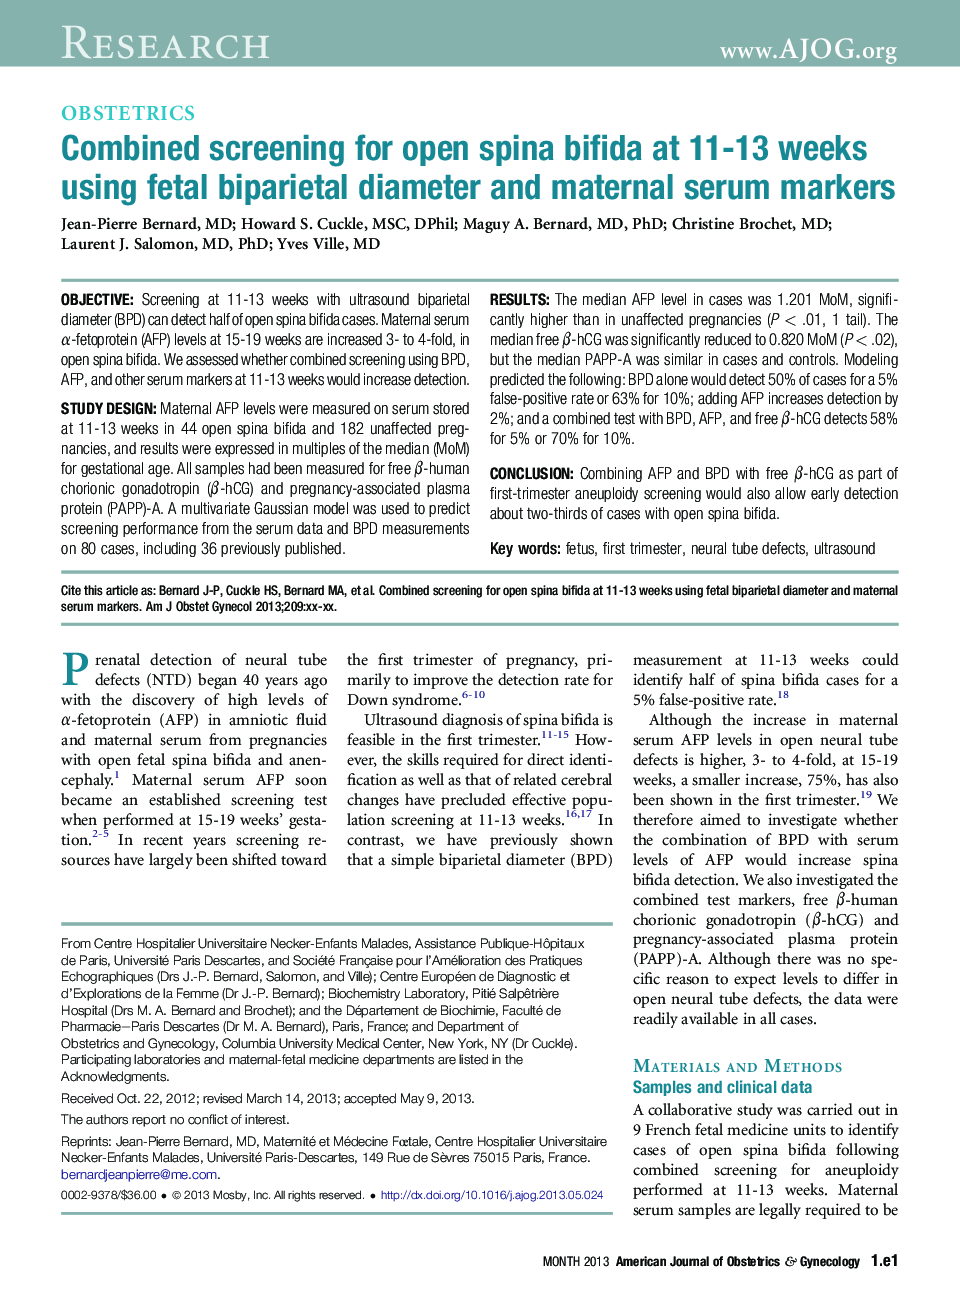 Combined screening for open spina bifida at 11-13 weeks using fetal biparietal diameter and maternal serum markers